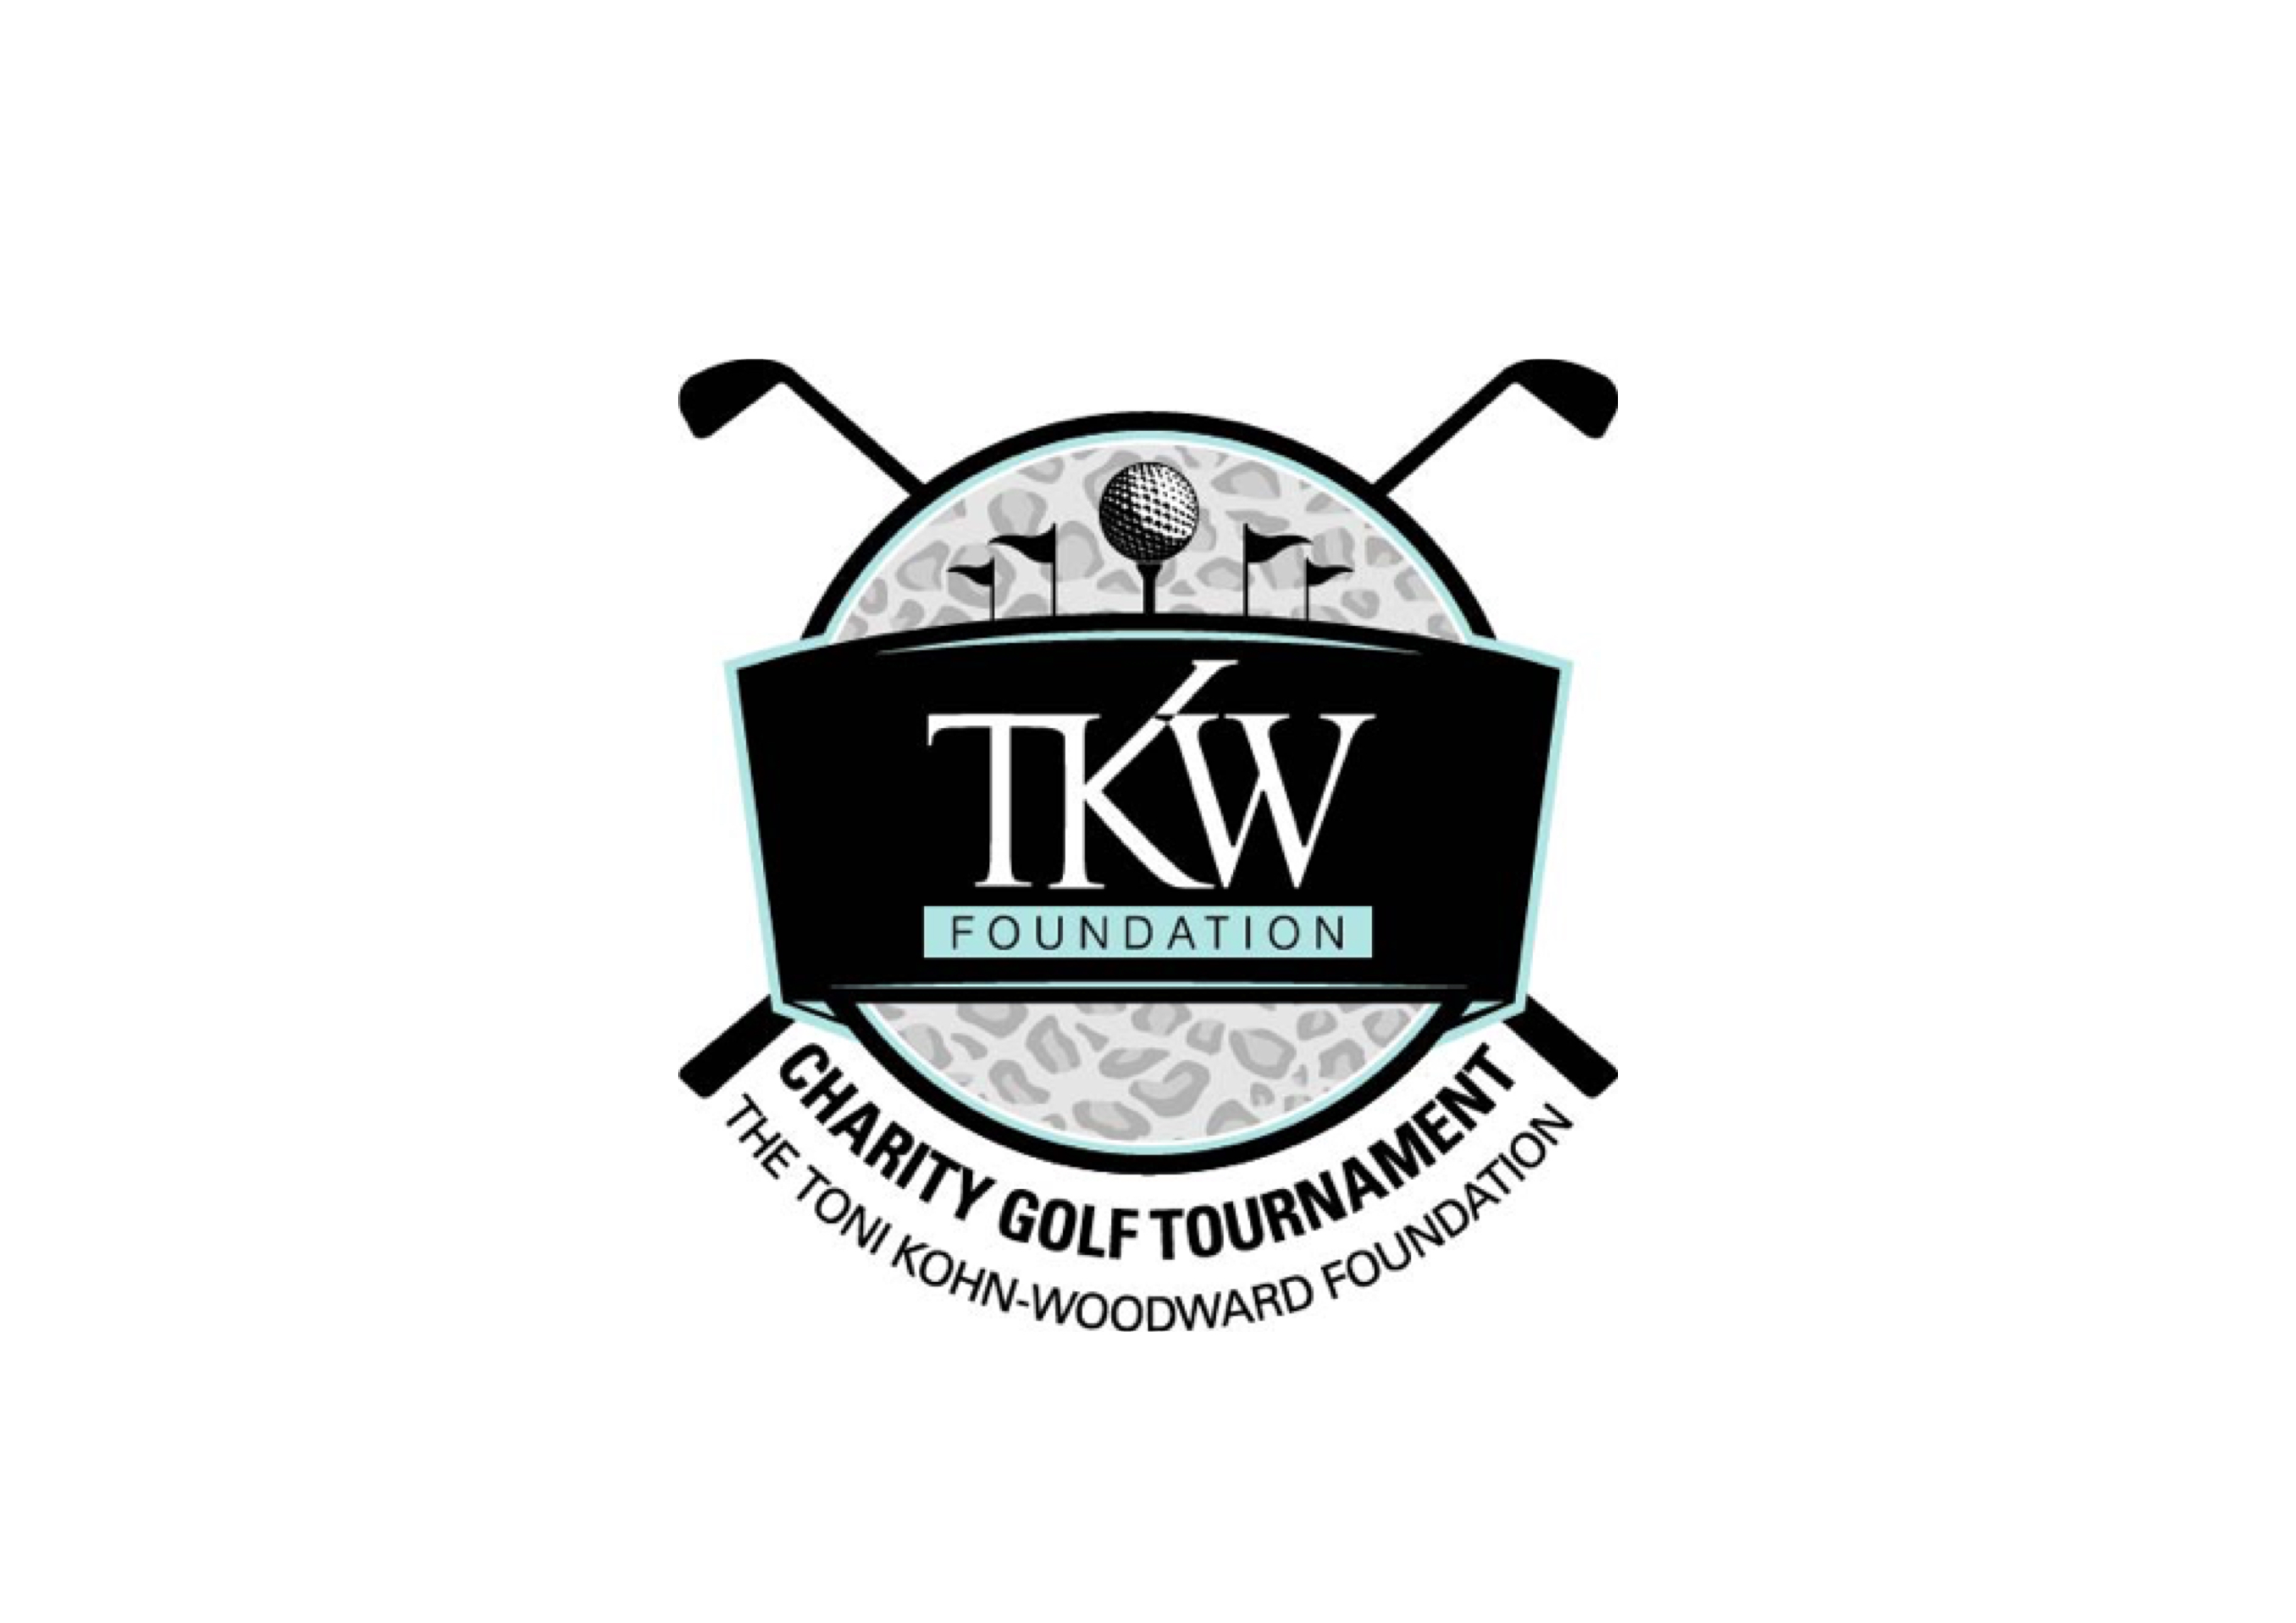 THE TONI KOHN-WOODWARD 2nd ANNUAL CHARITY GOLF TOURNAMENT